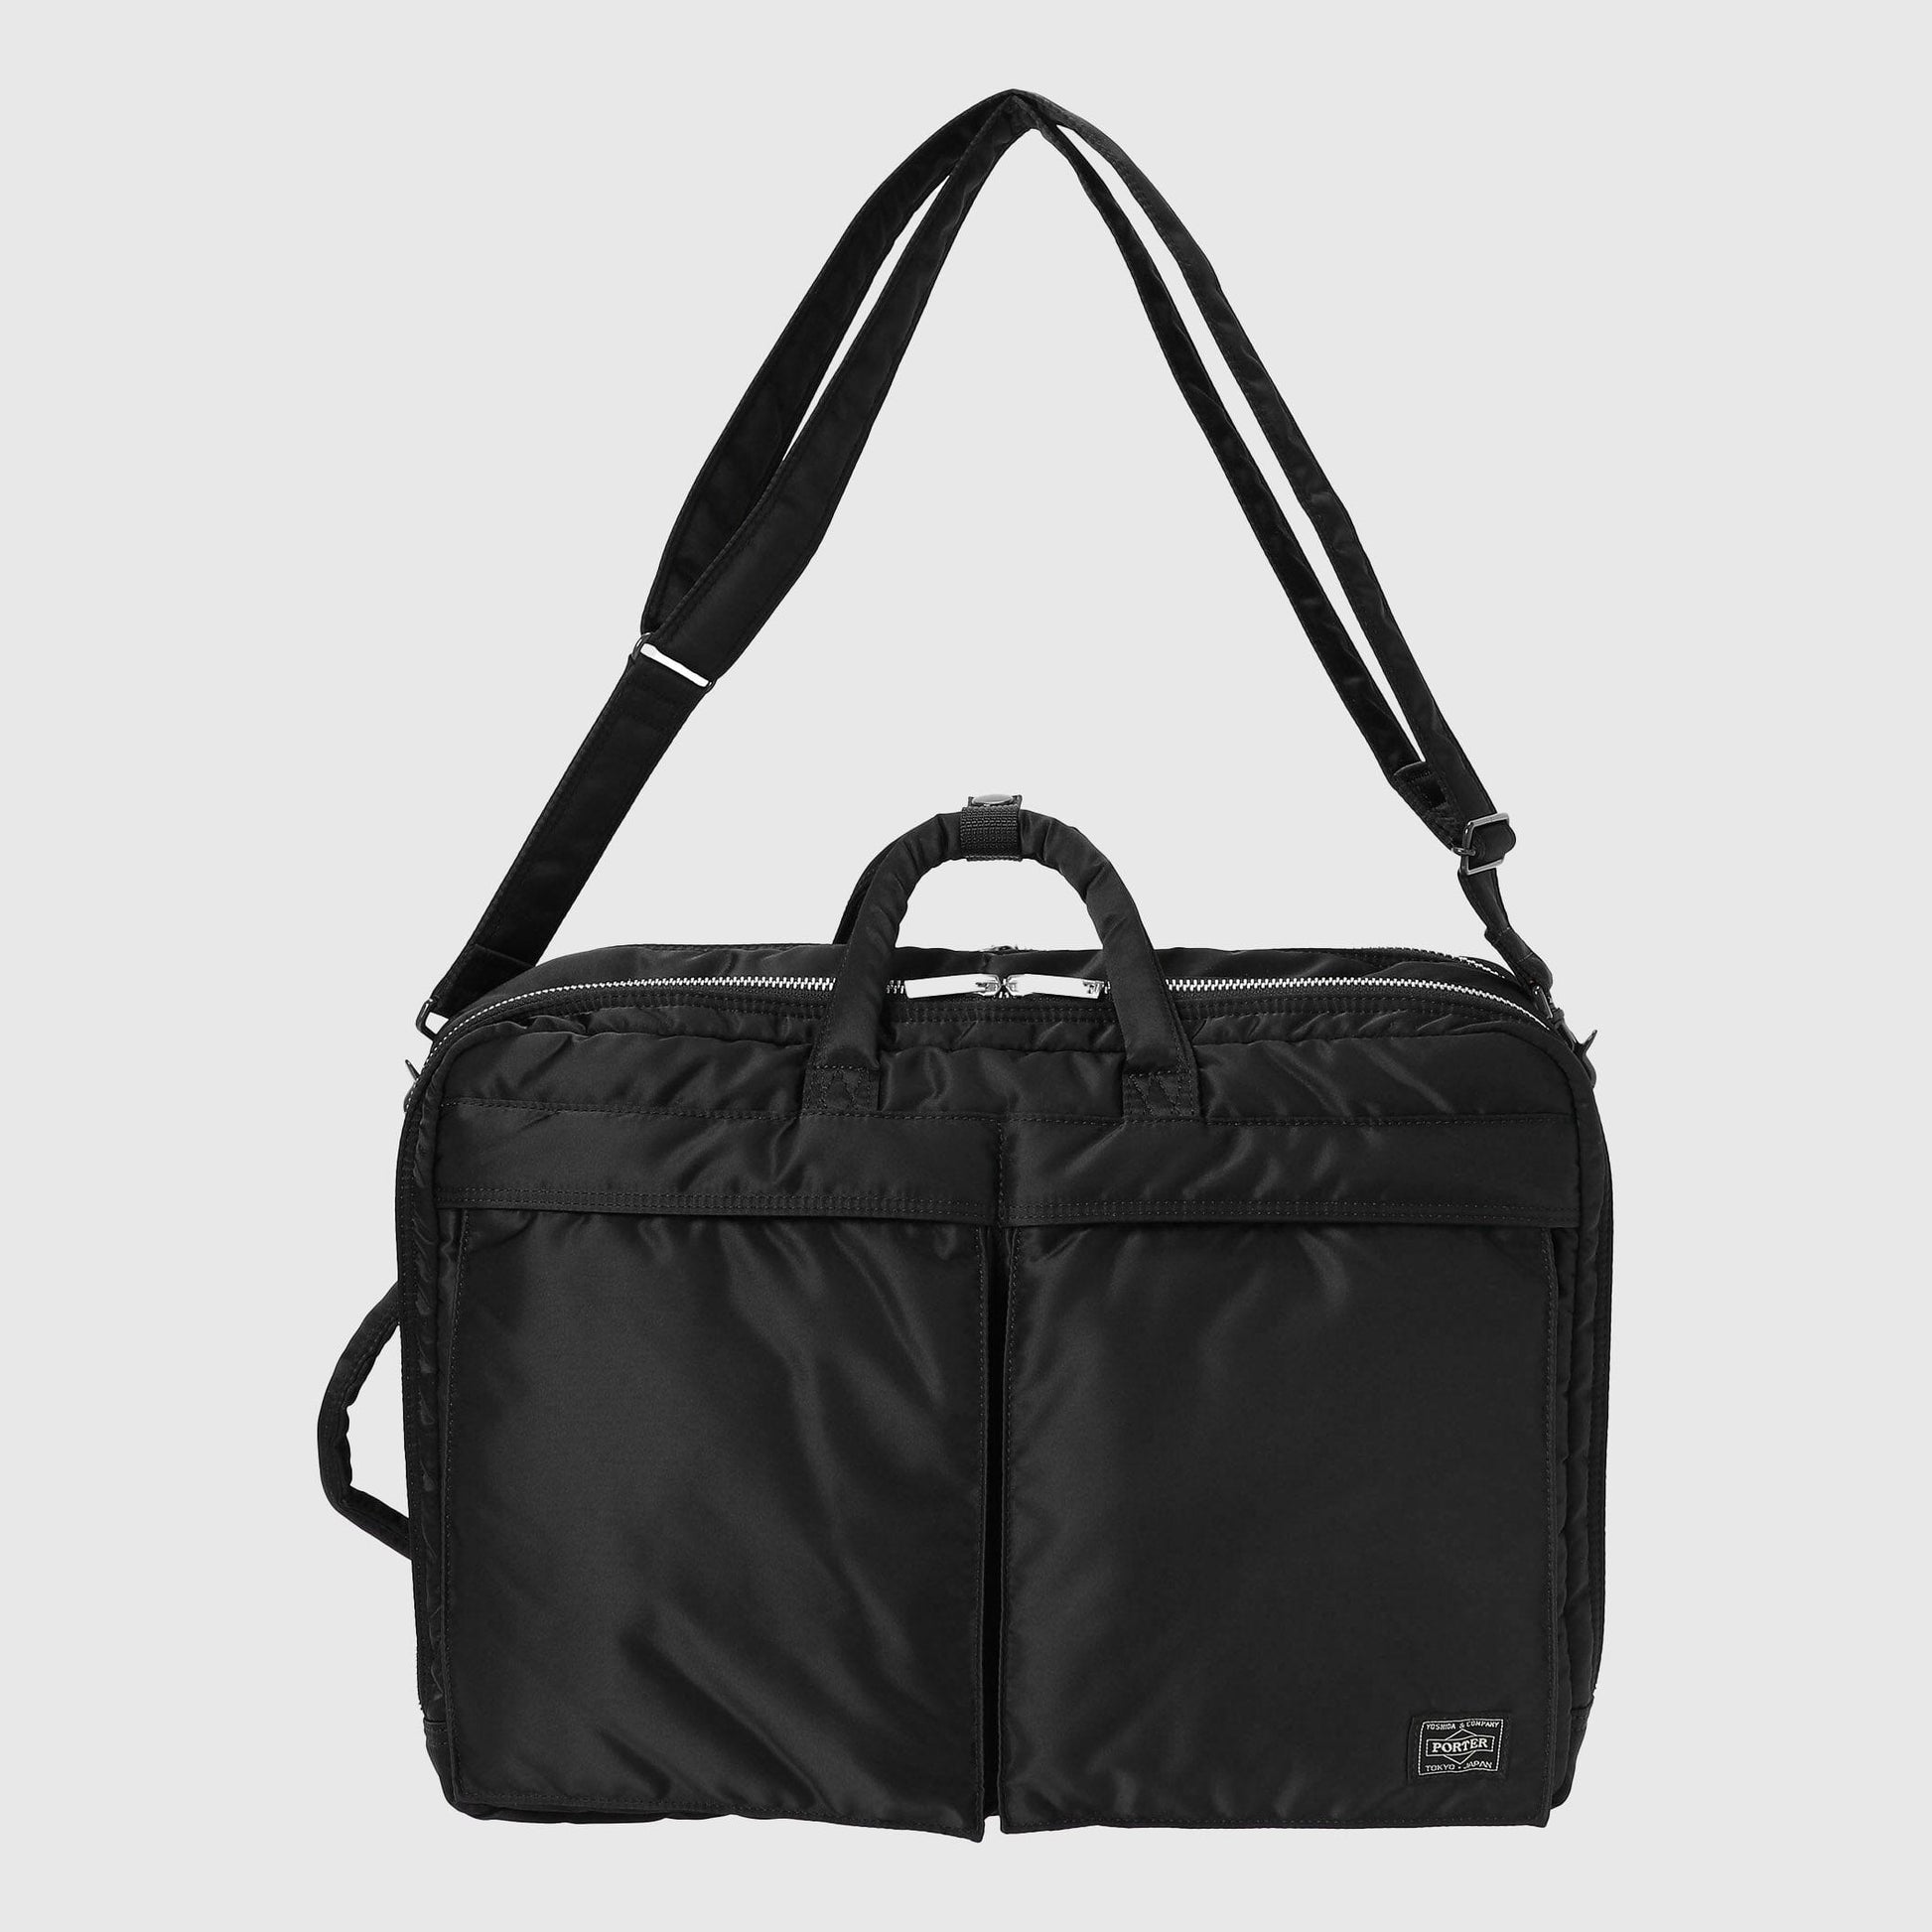 Porter-Yoshida & Co. Tanker 3Way Briefcase - Black Bag Porter-Yoshida & Co. 